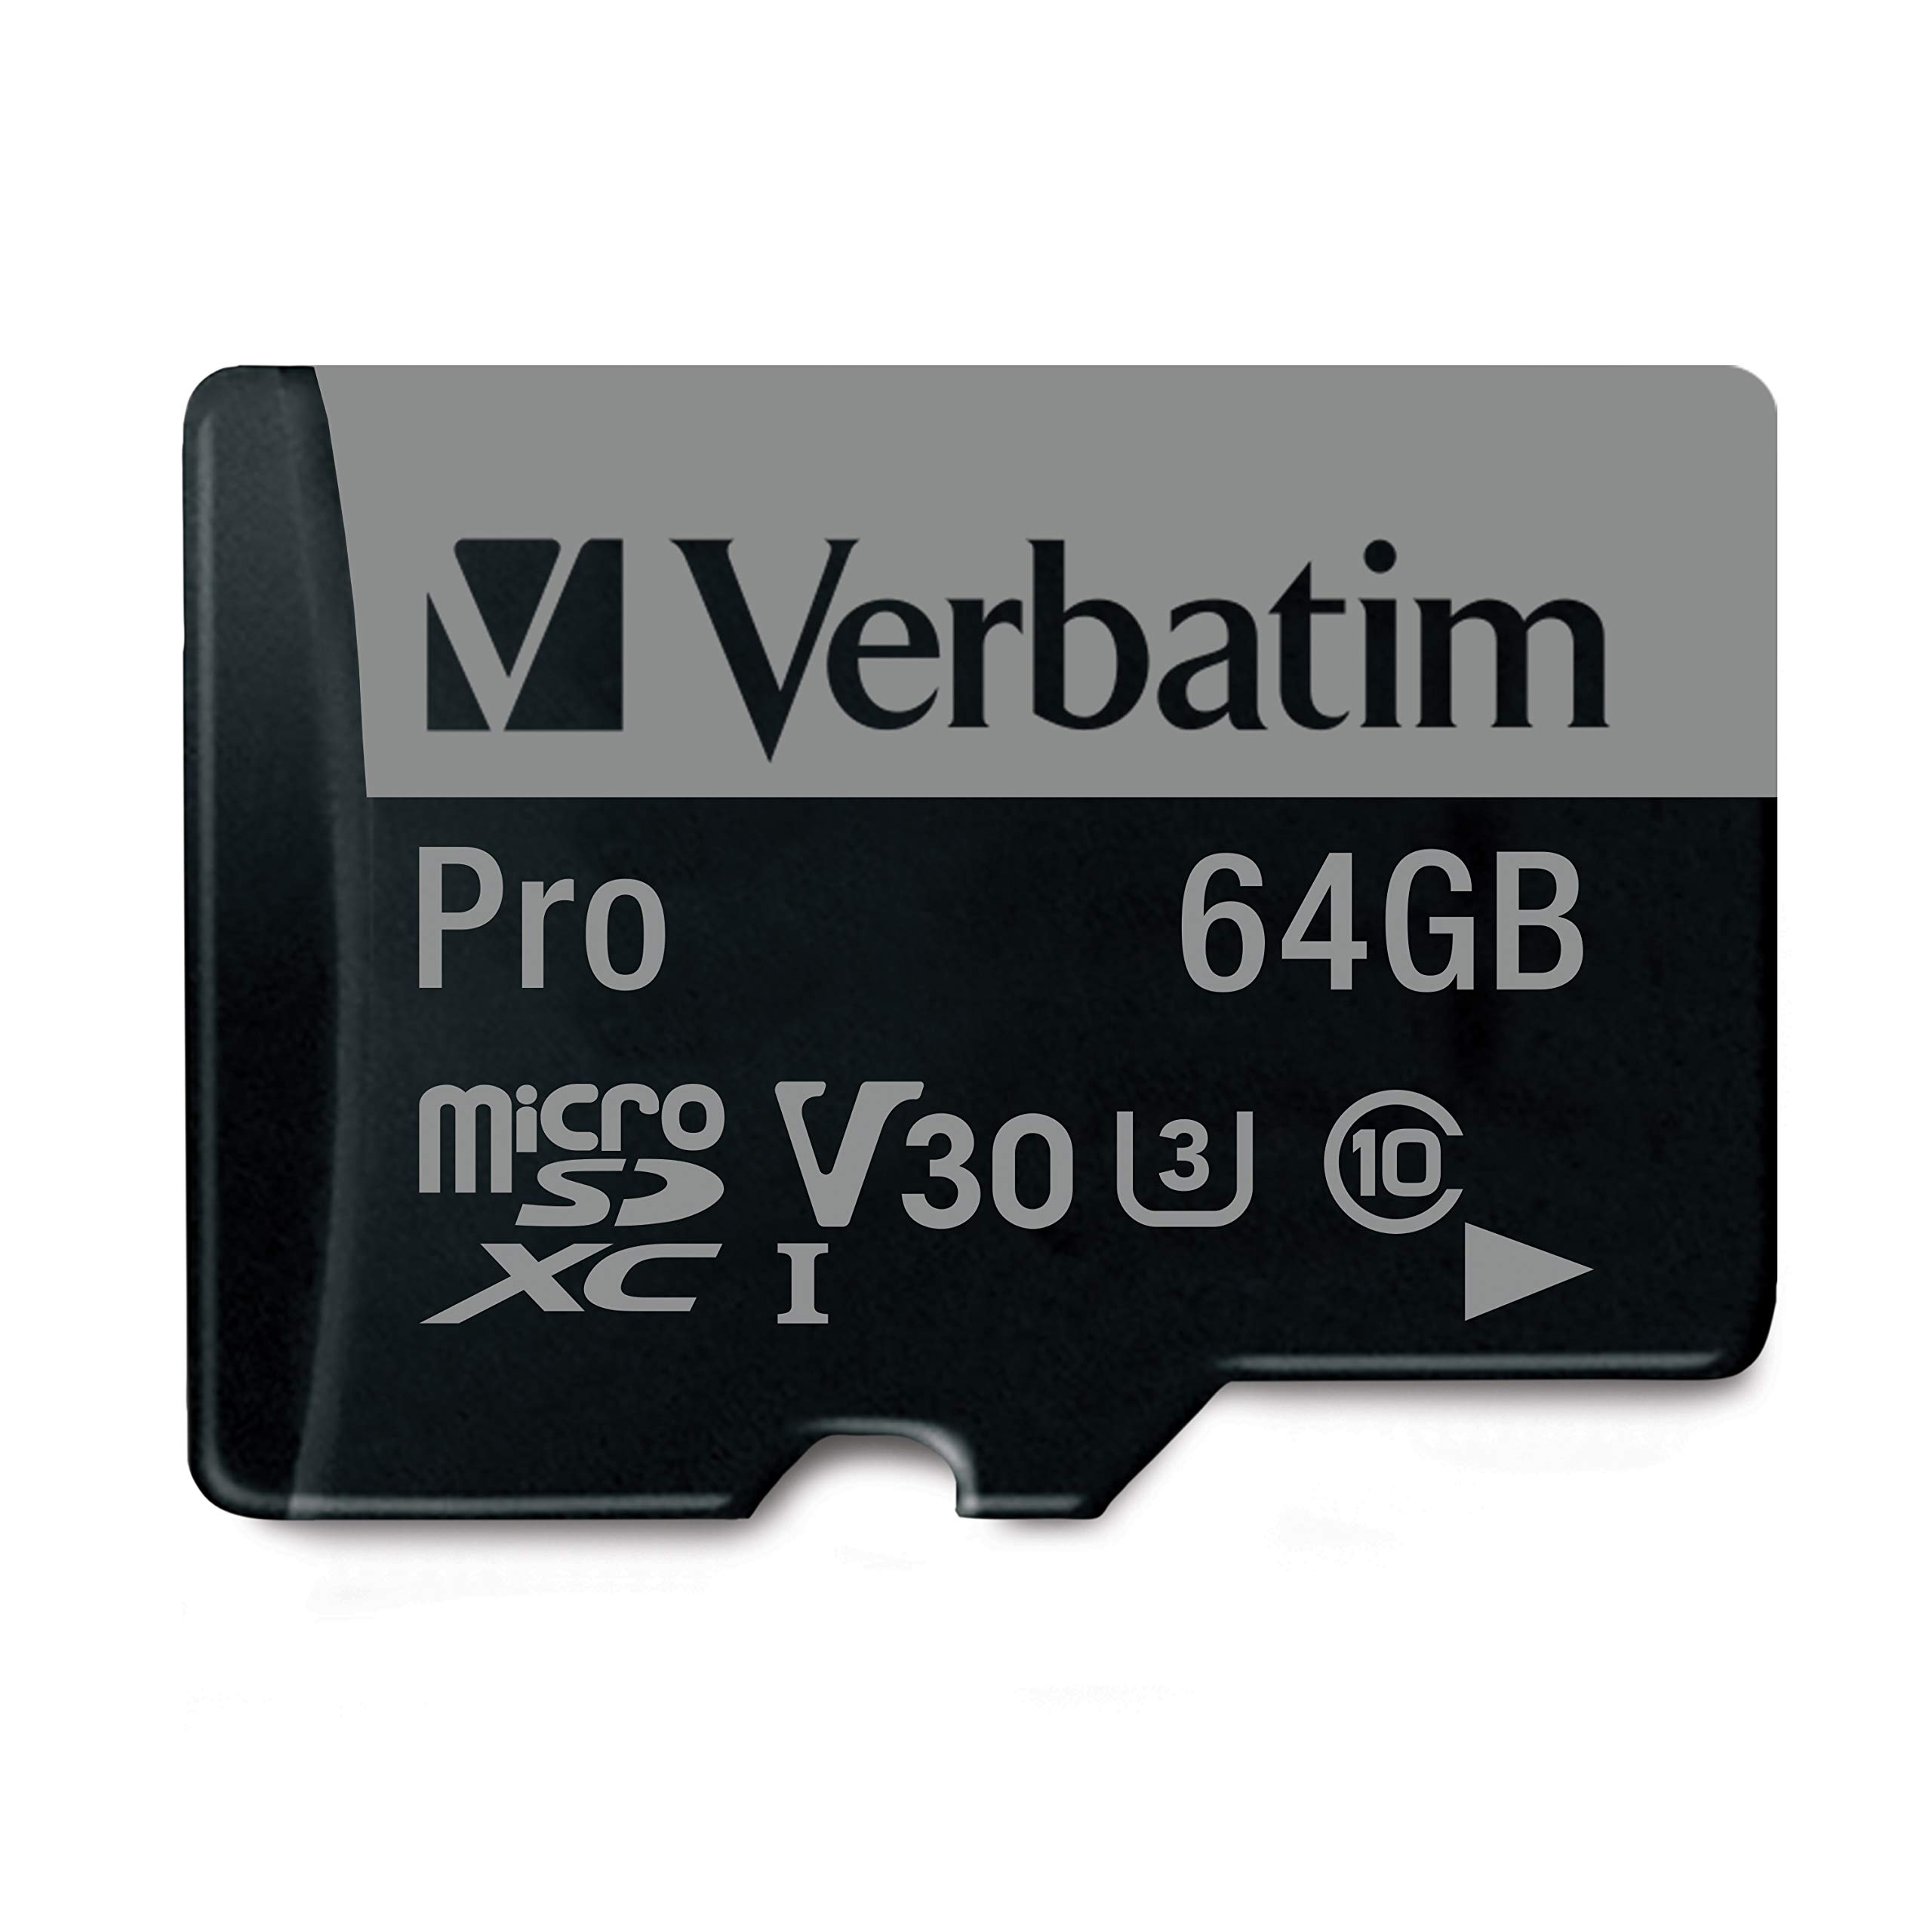 Verbatim 64GB Pro 600X microSDXC Memory Card with Adapter UHS-I V30 U3 Class 10並行輸入品